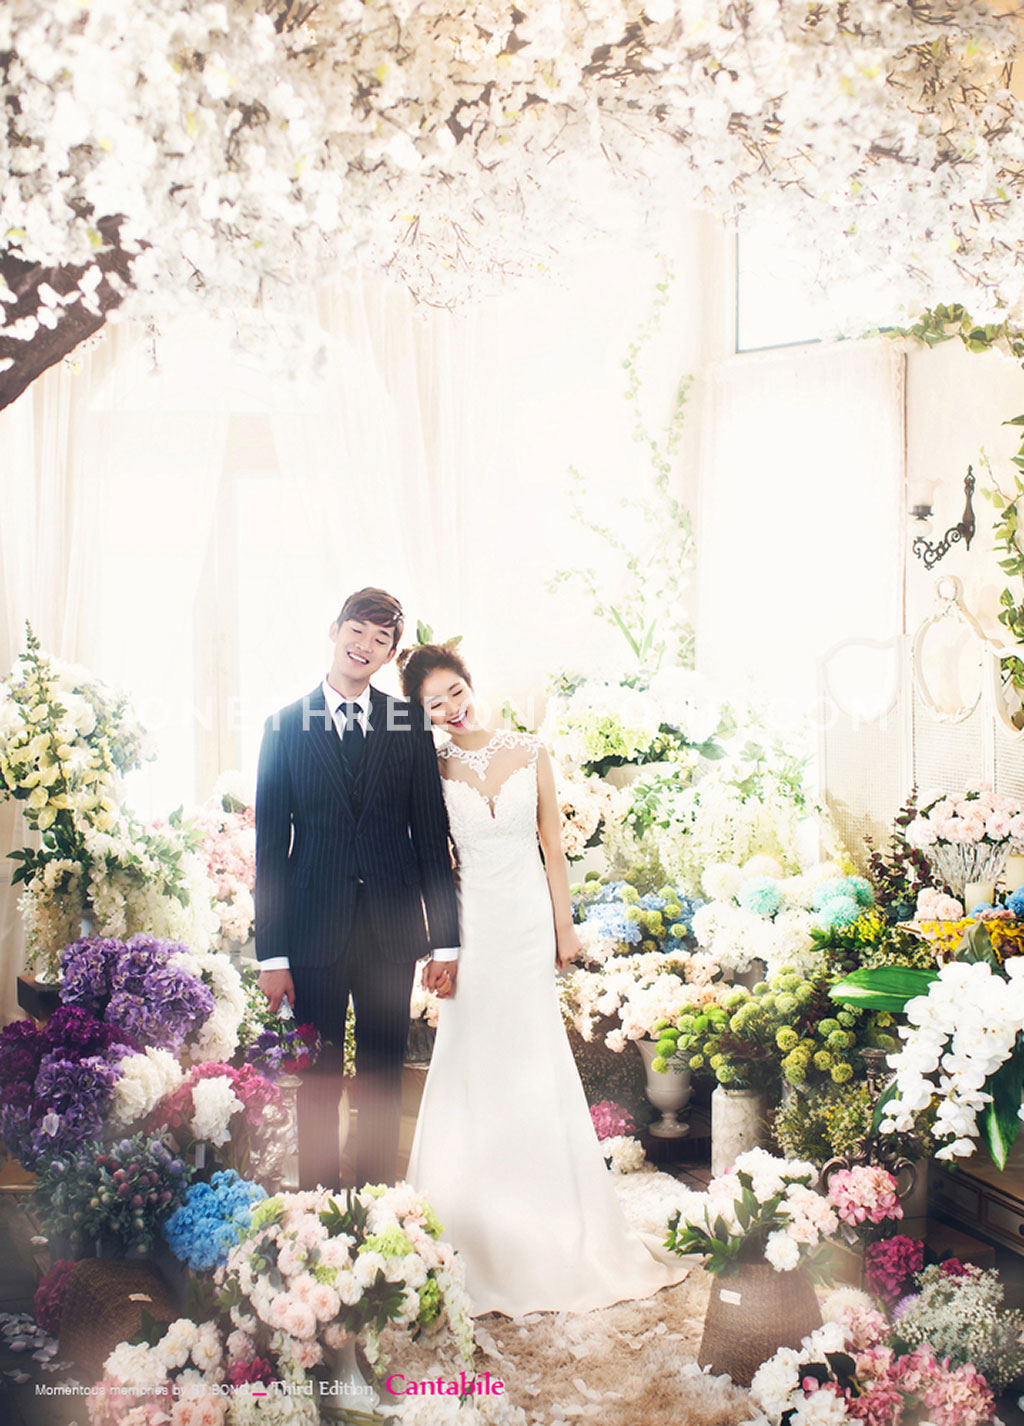 Korea Studio Pre-wedding Photography: 2015 Cantabile Collection by Bong Studio on OneThreeOneFour 2